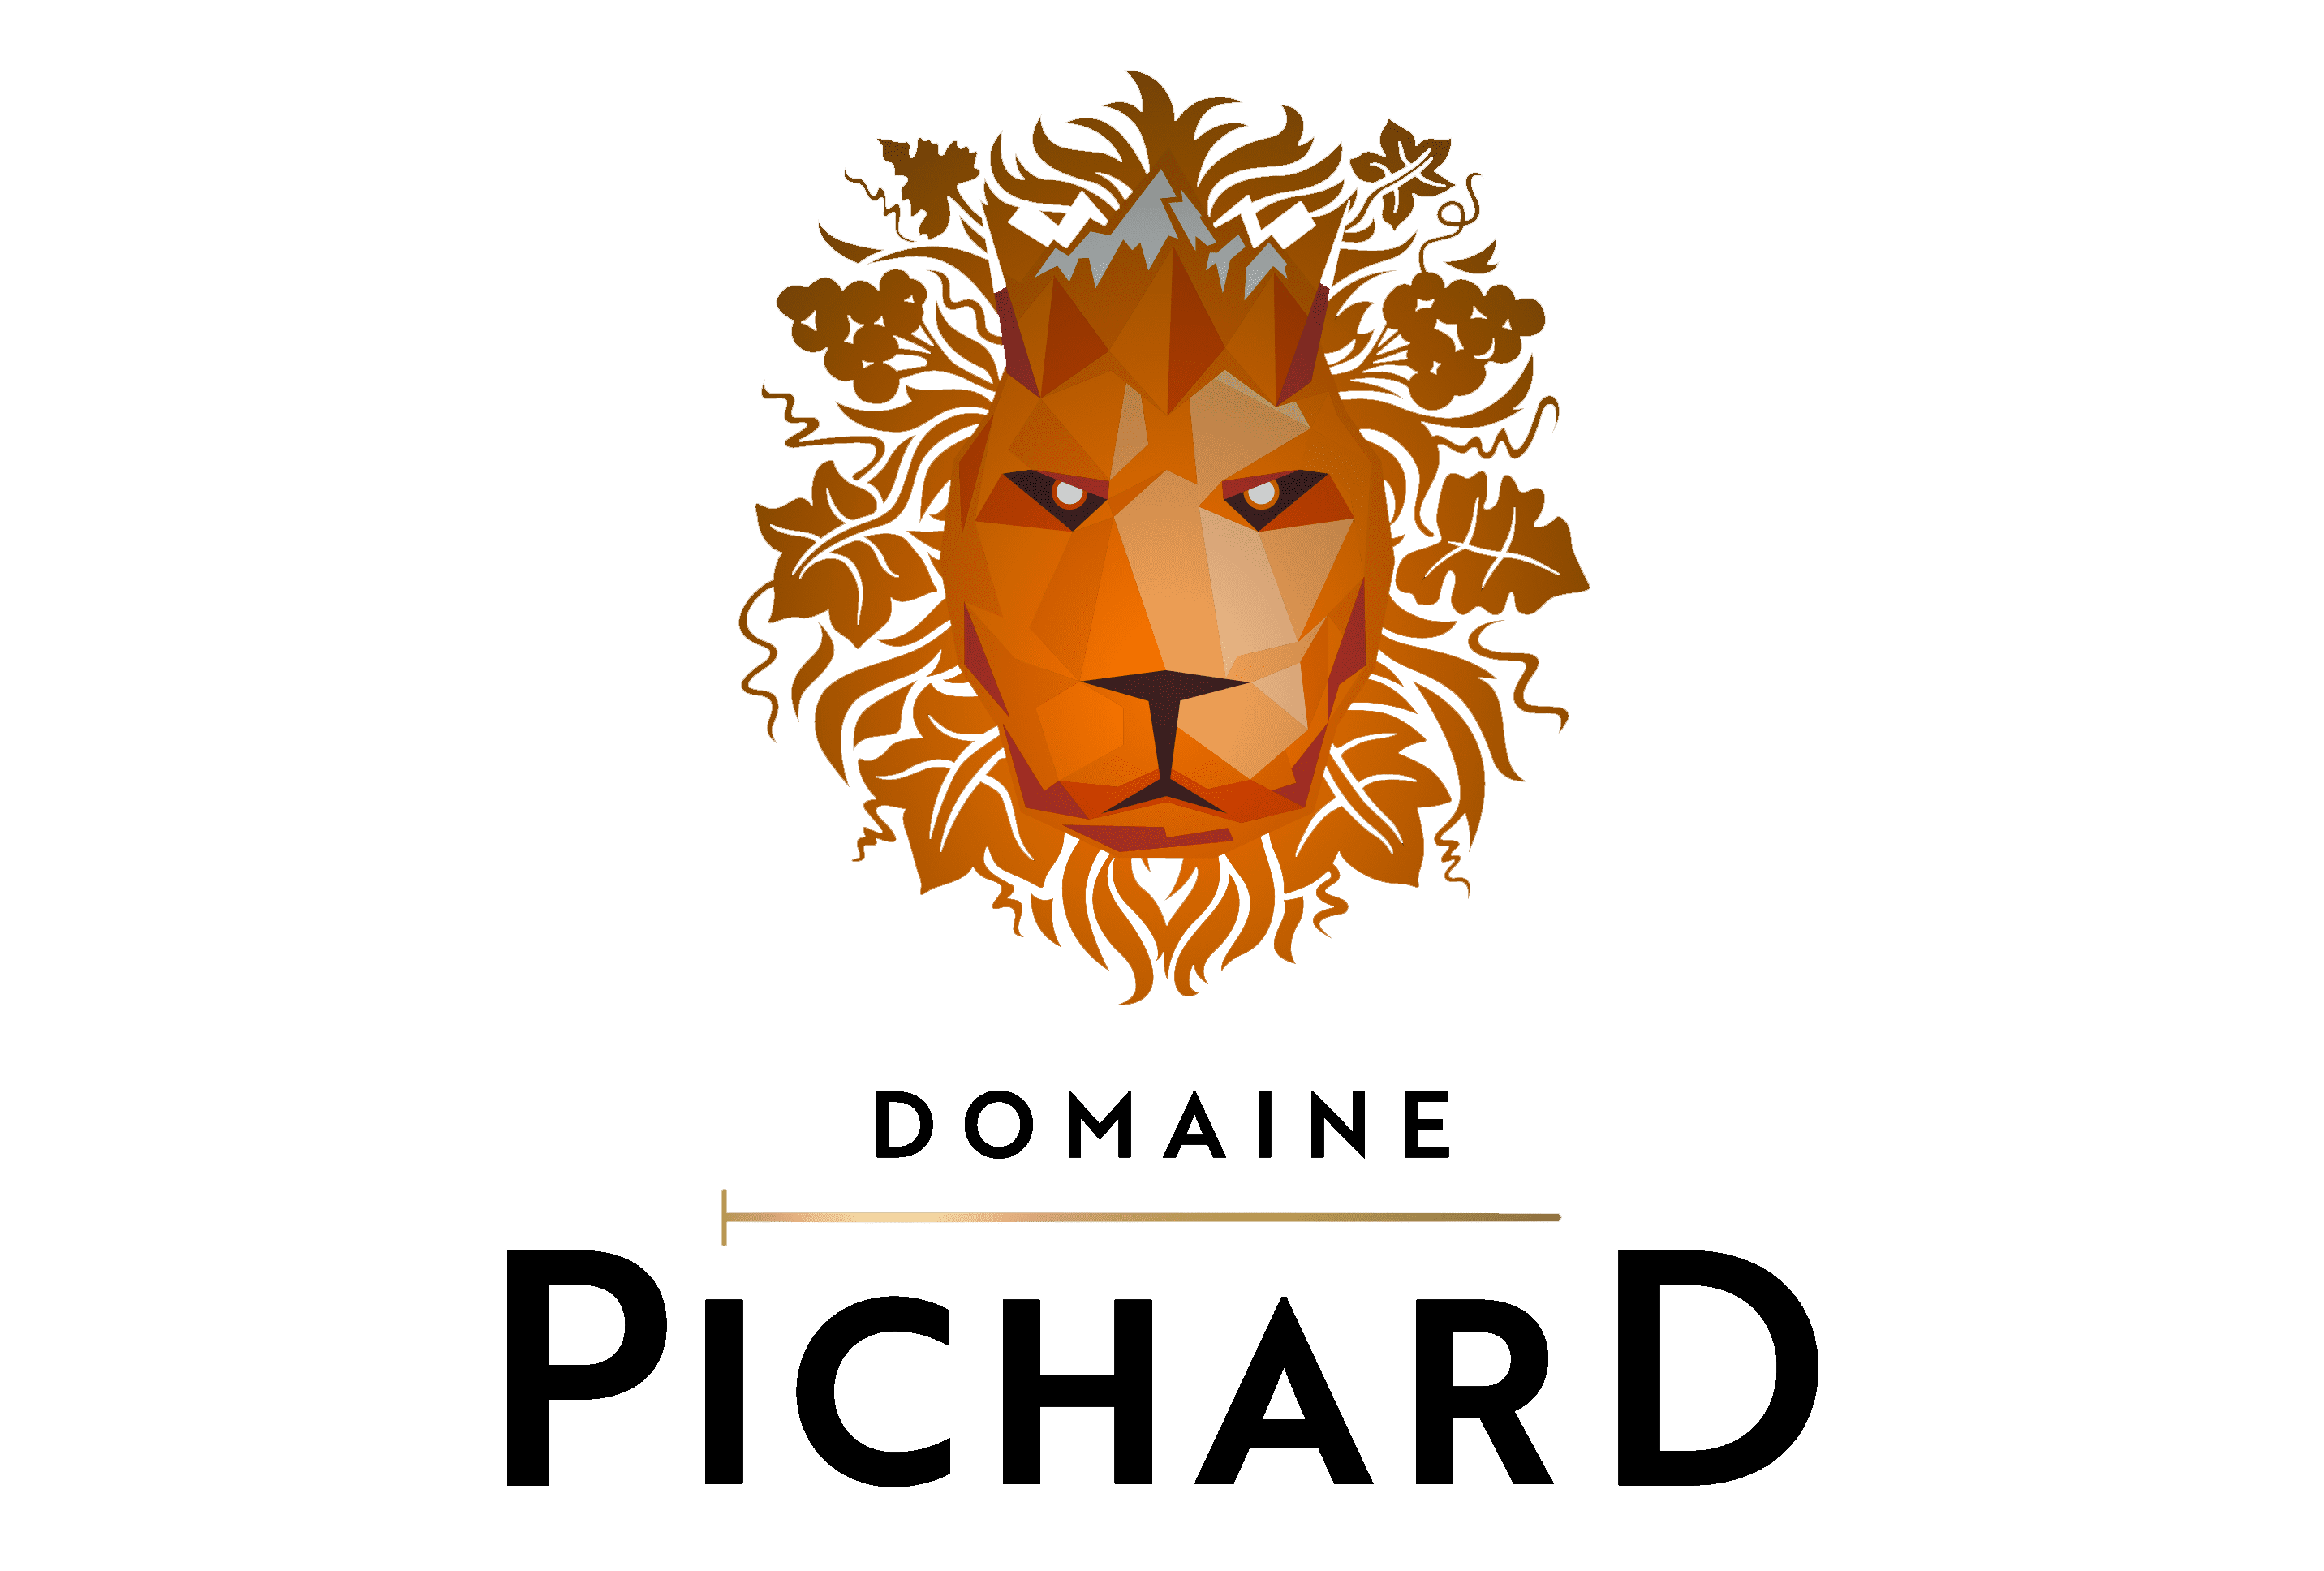 Domaine Pichard LOGO